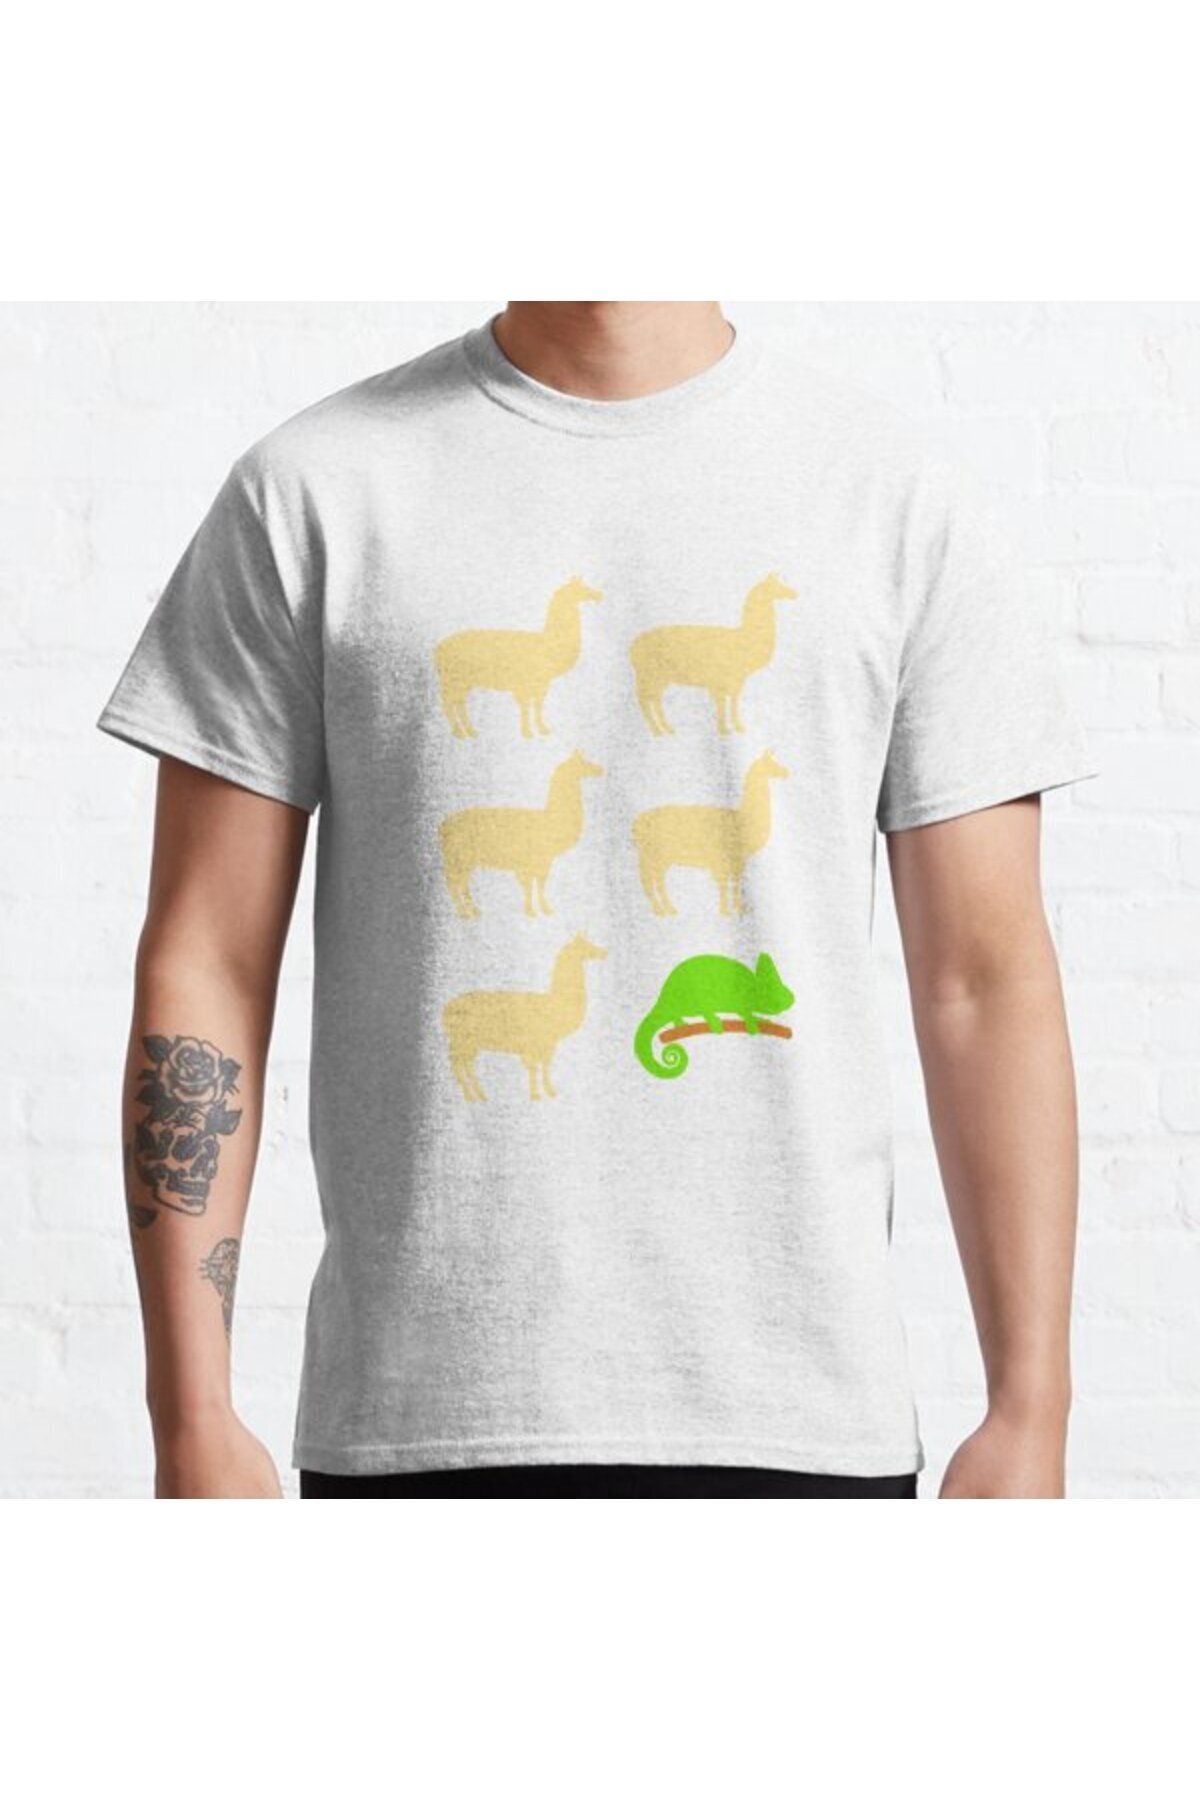 ZOKAWEAR Bol Kalıp Unisex Llama Llama Llama Llama Llama Chameleon Tasarım Baskılı Tshirt